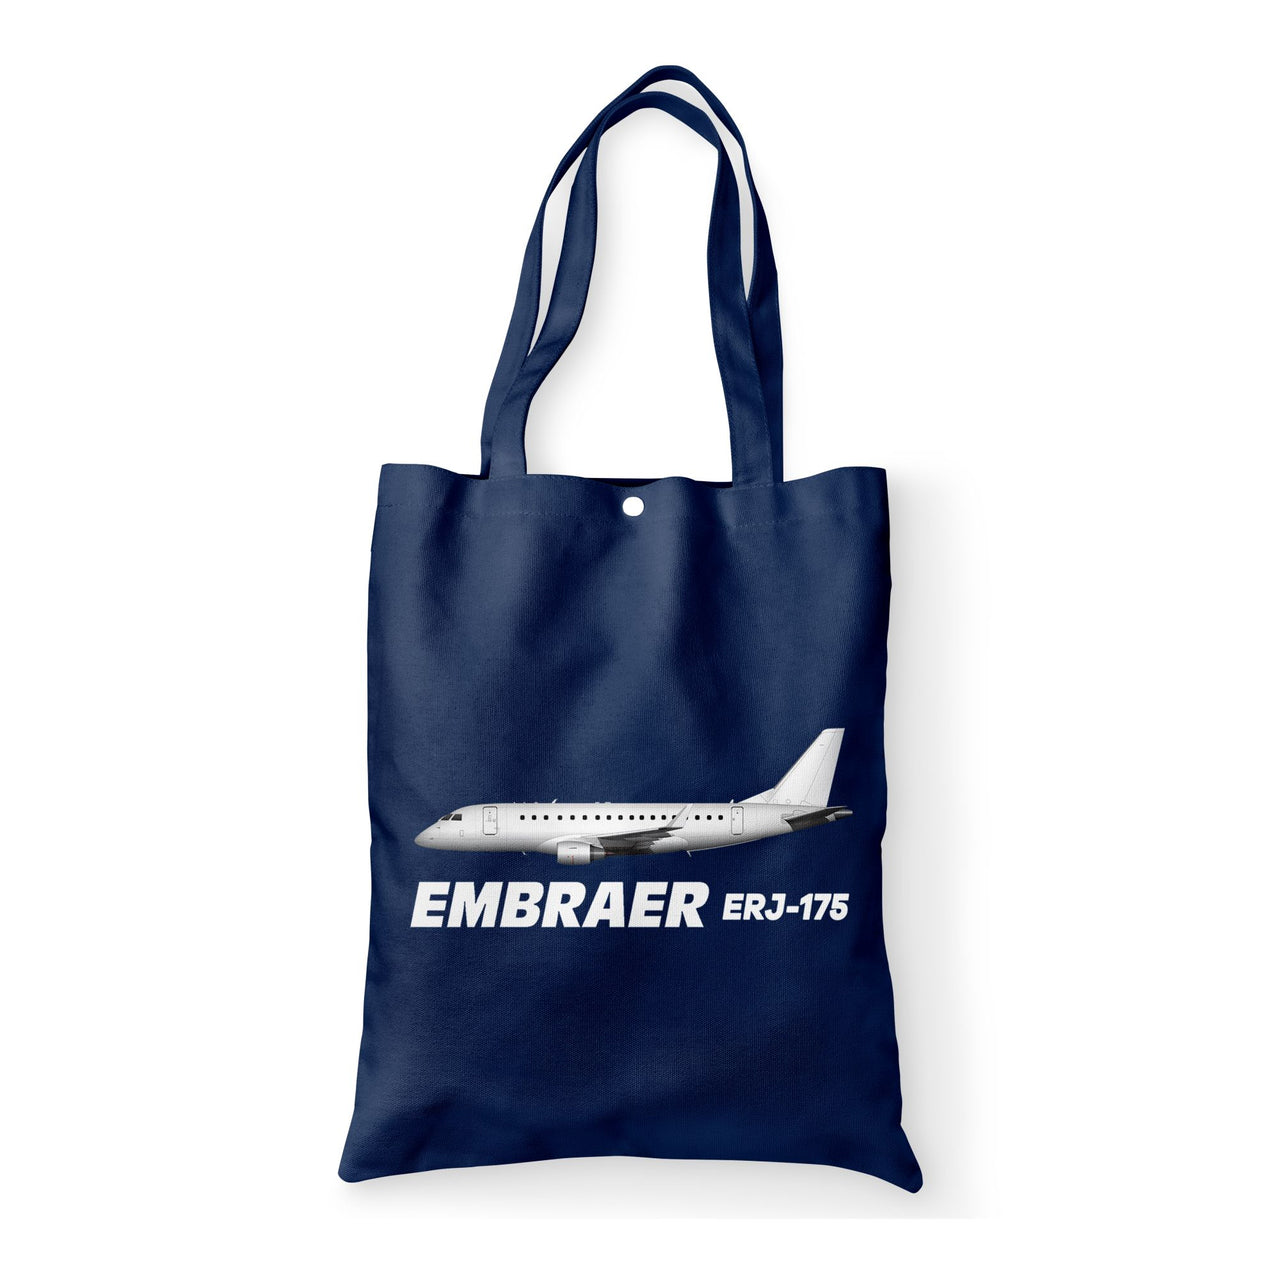 The Embraer ERJ-175 Designed Tote Bags